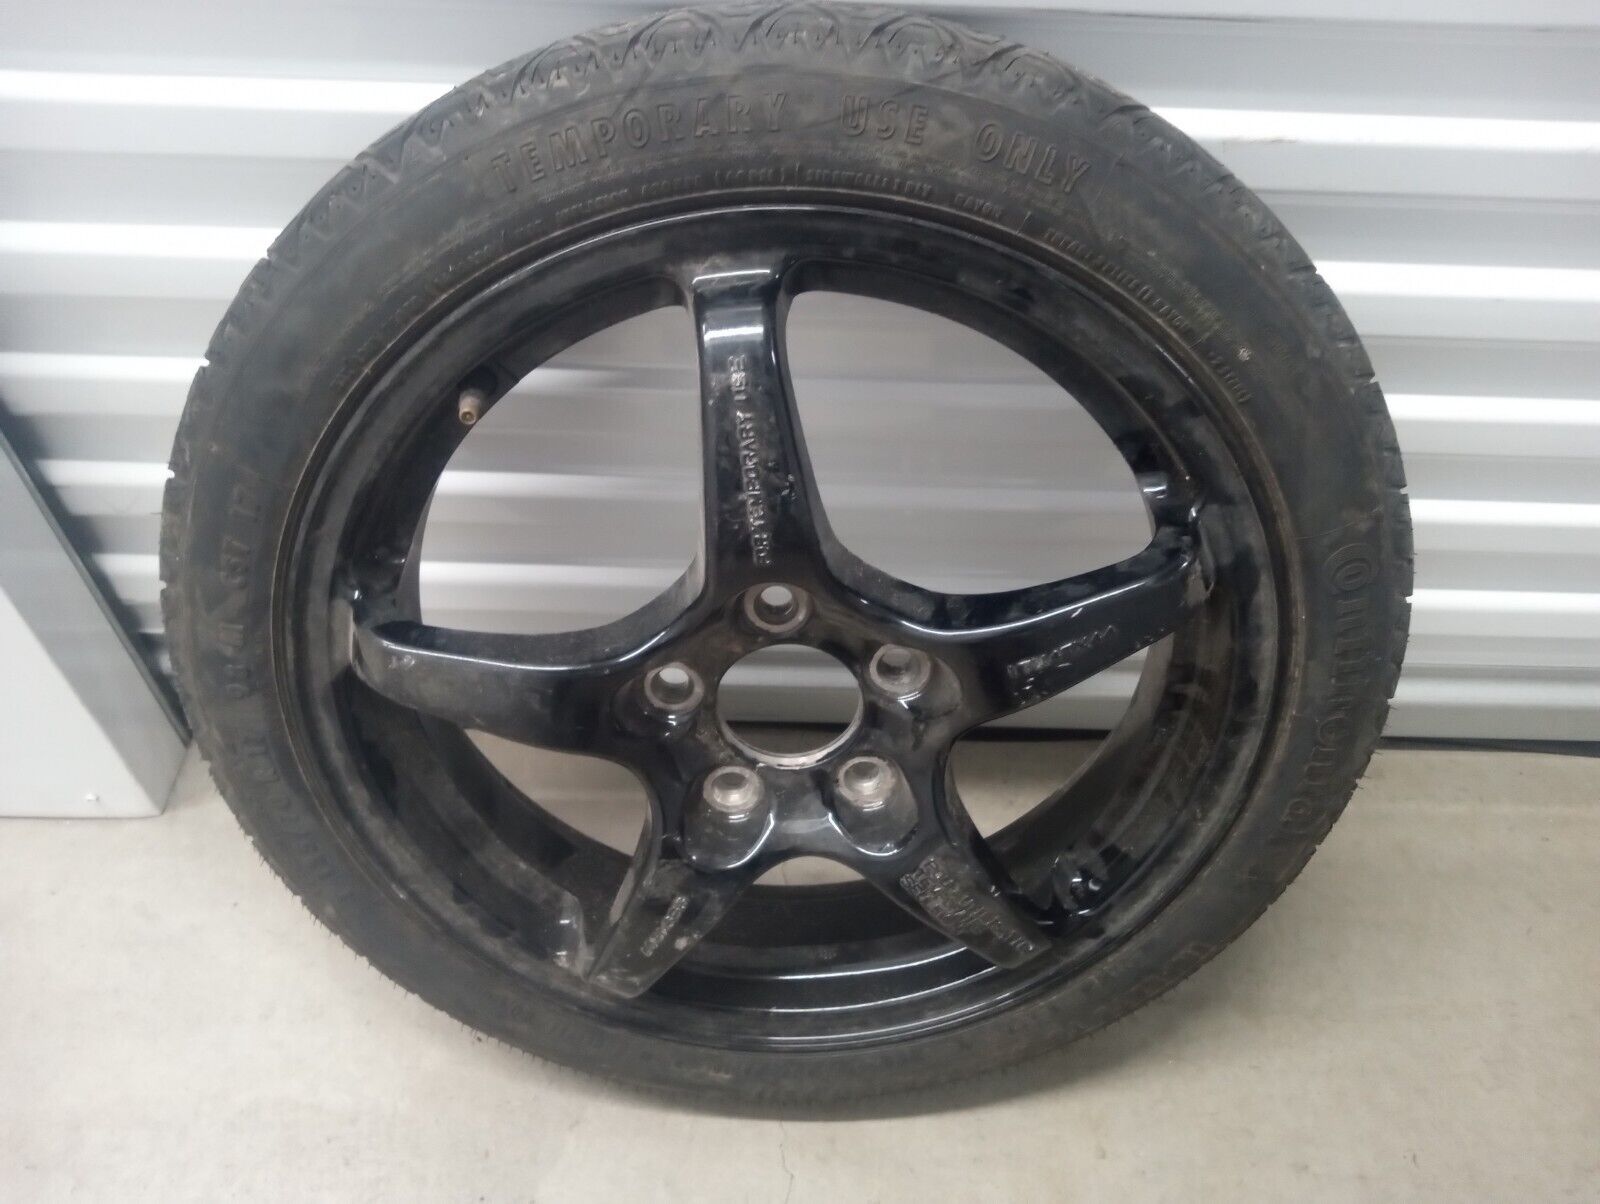 2006-2011 Cadillac DTS Spare Tire Donut Wheel 17” RIM OEM T125/70R17